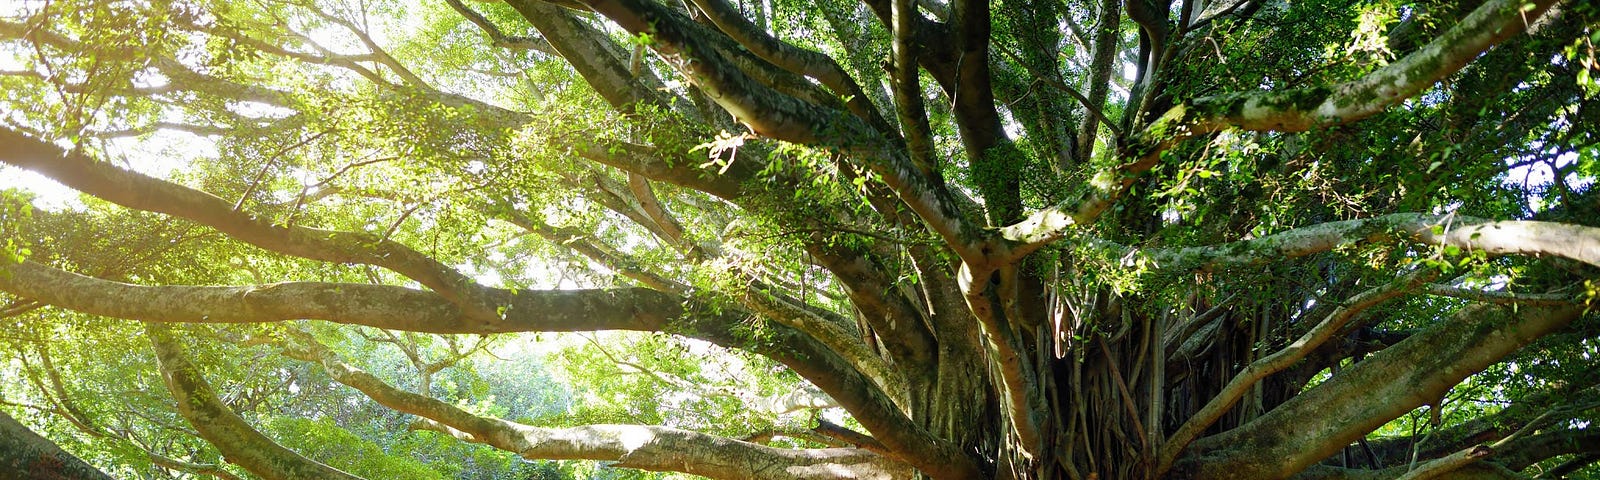 Light shines on a banyan tree